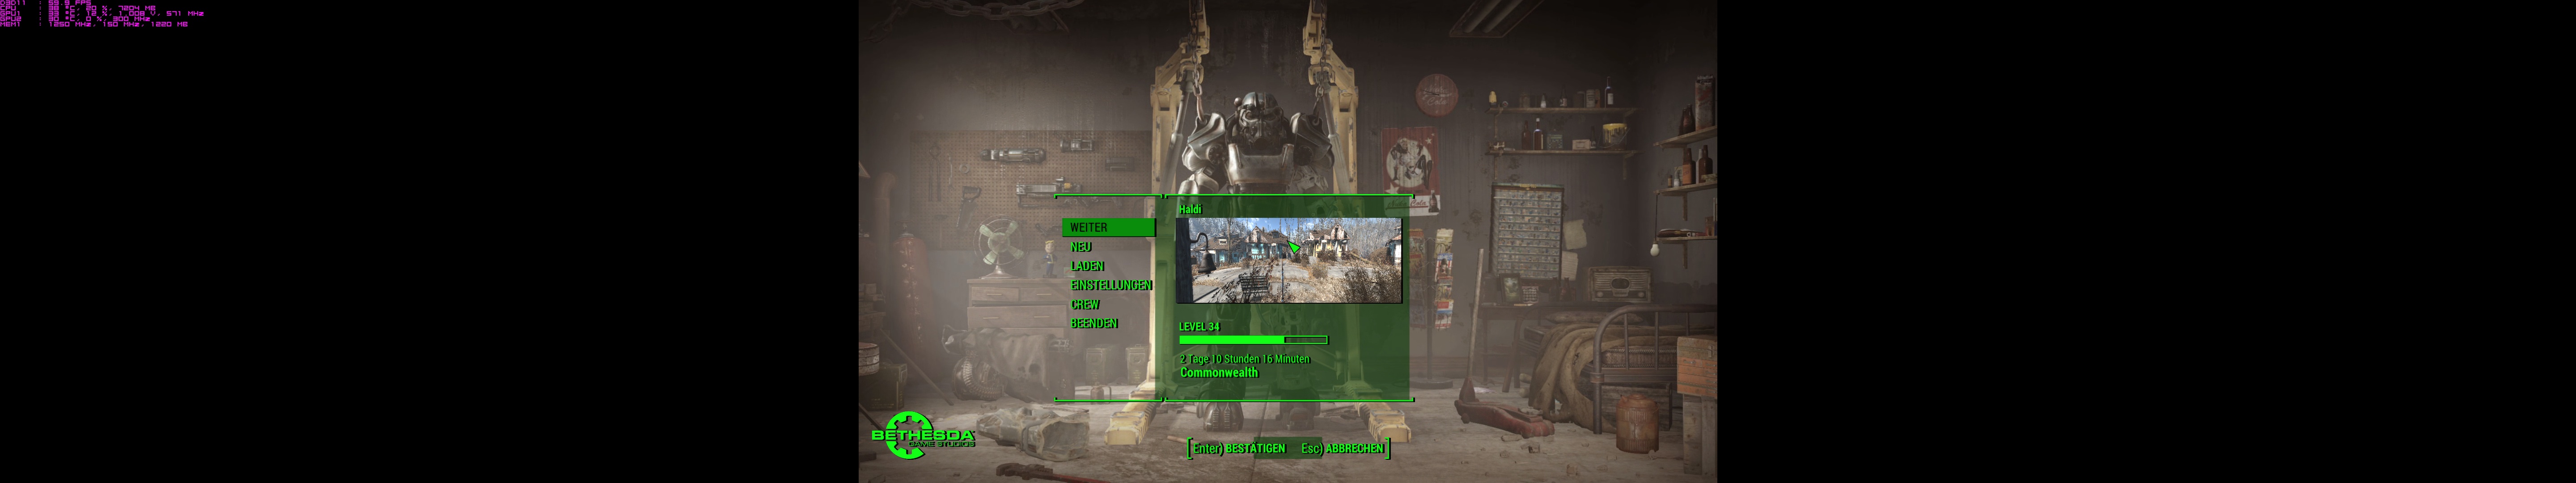 Fallout4_2015_11_15_18_17_25_357.jpg